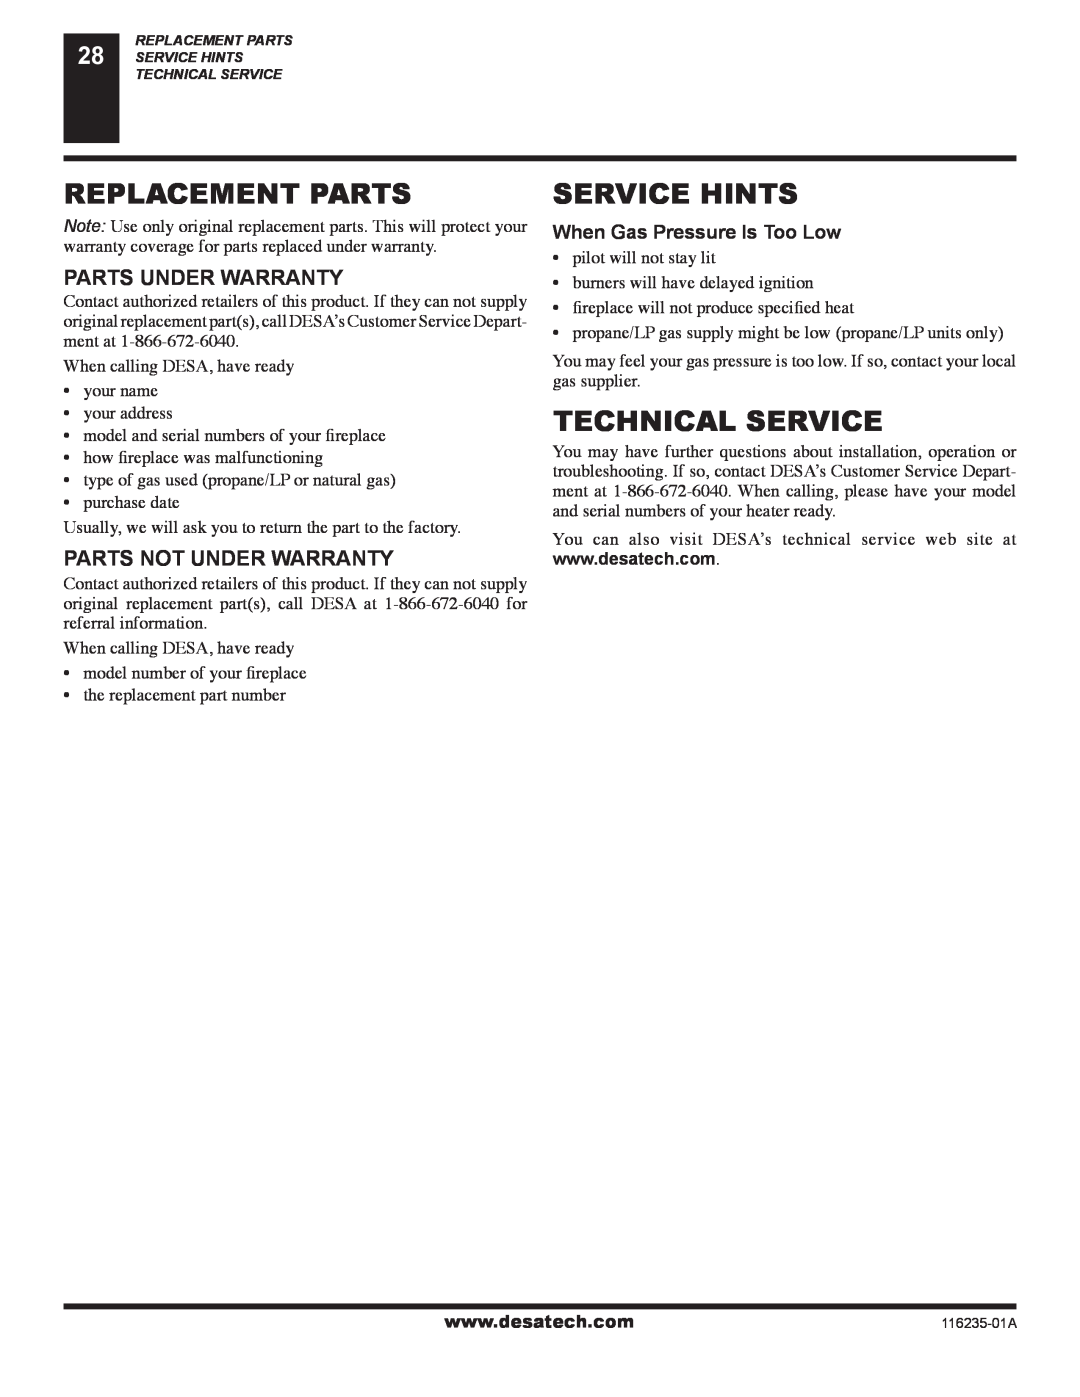 Desa (V)VC36NE Series Replacement Parts, Service Hints, Technical Service, Parts Under Warranty, Parts Not Under Warranty 